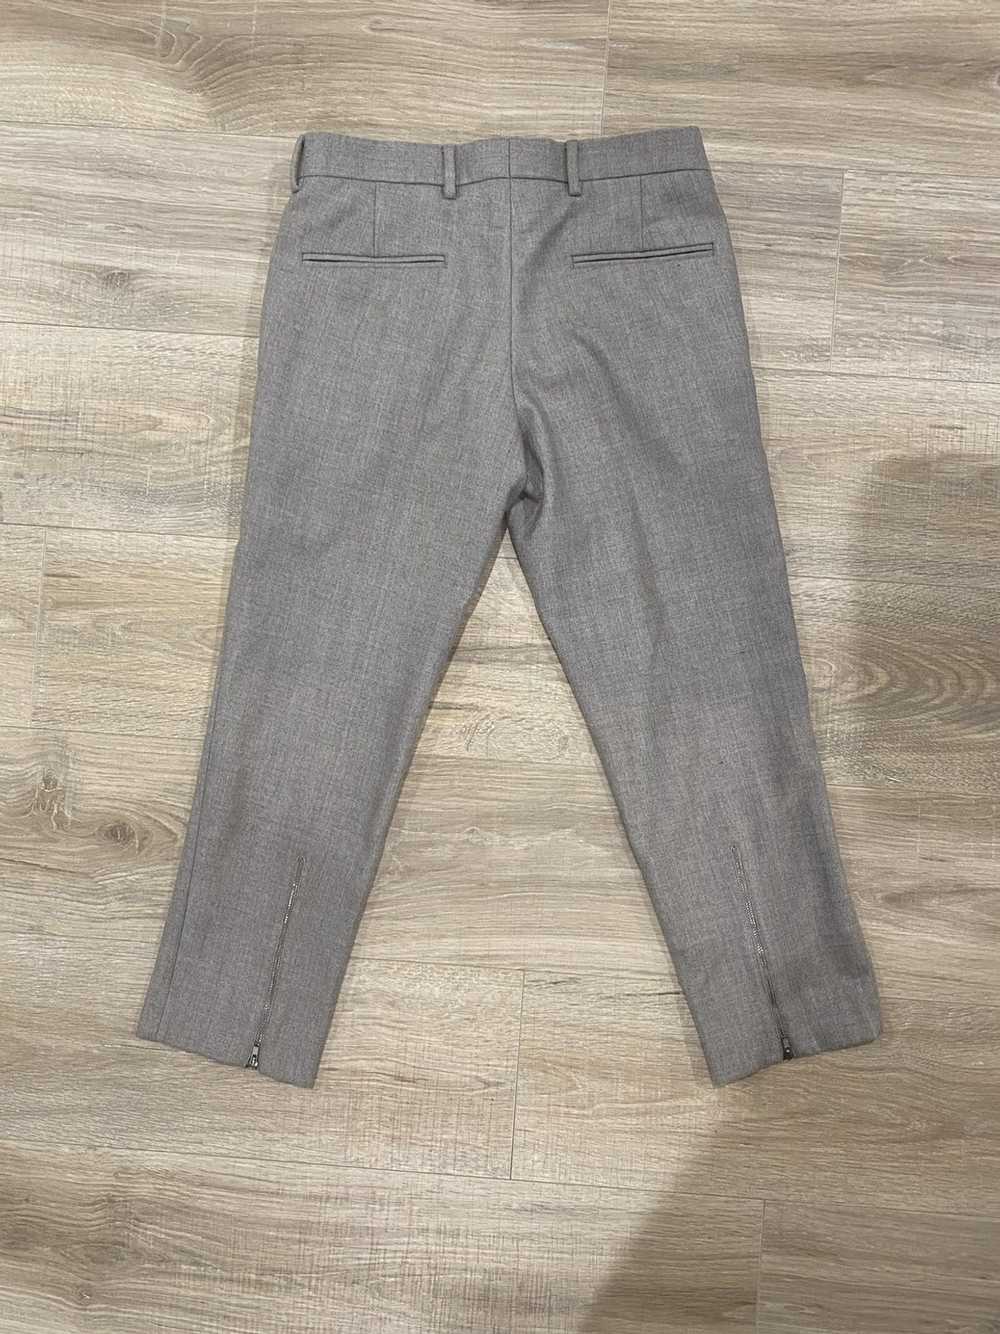 Topman Grey Trouser - image 3